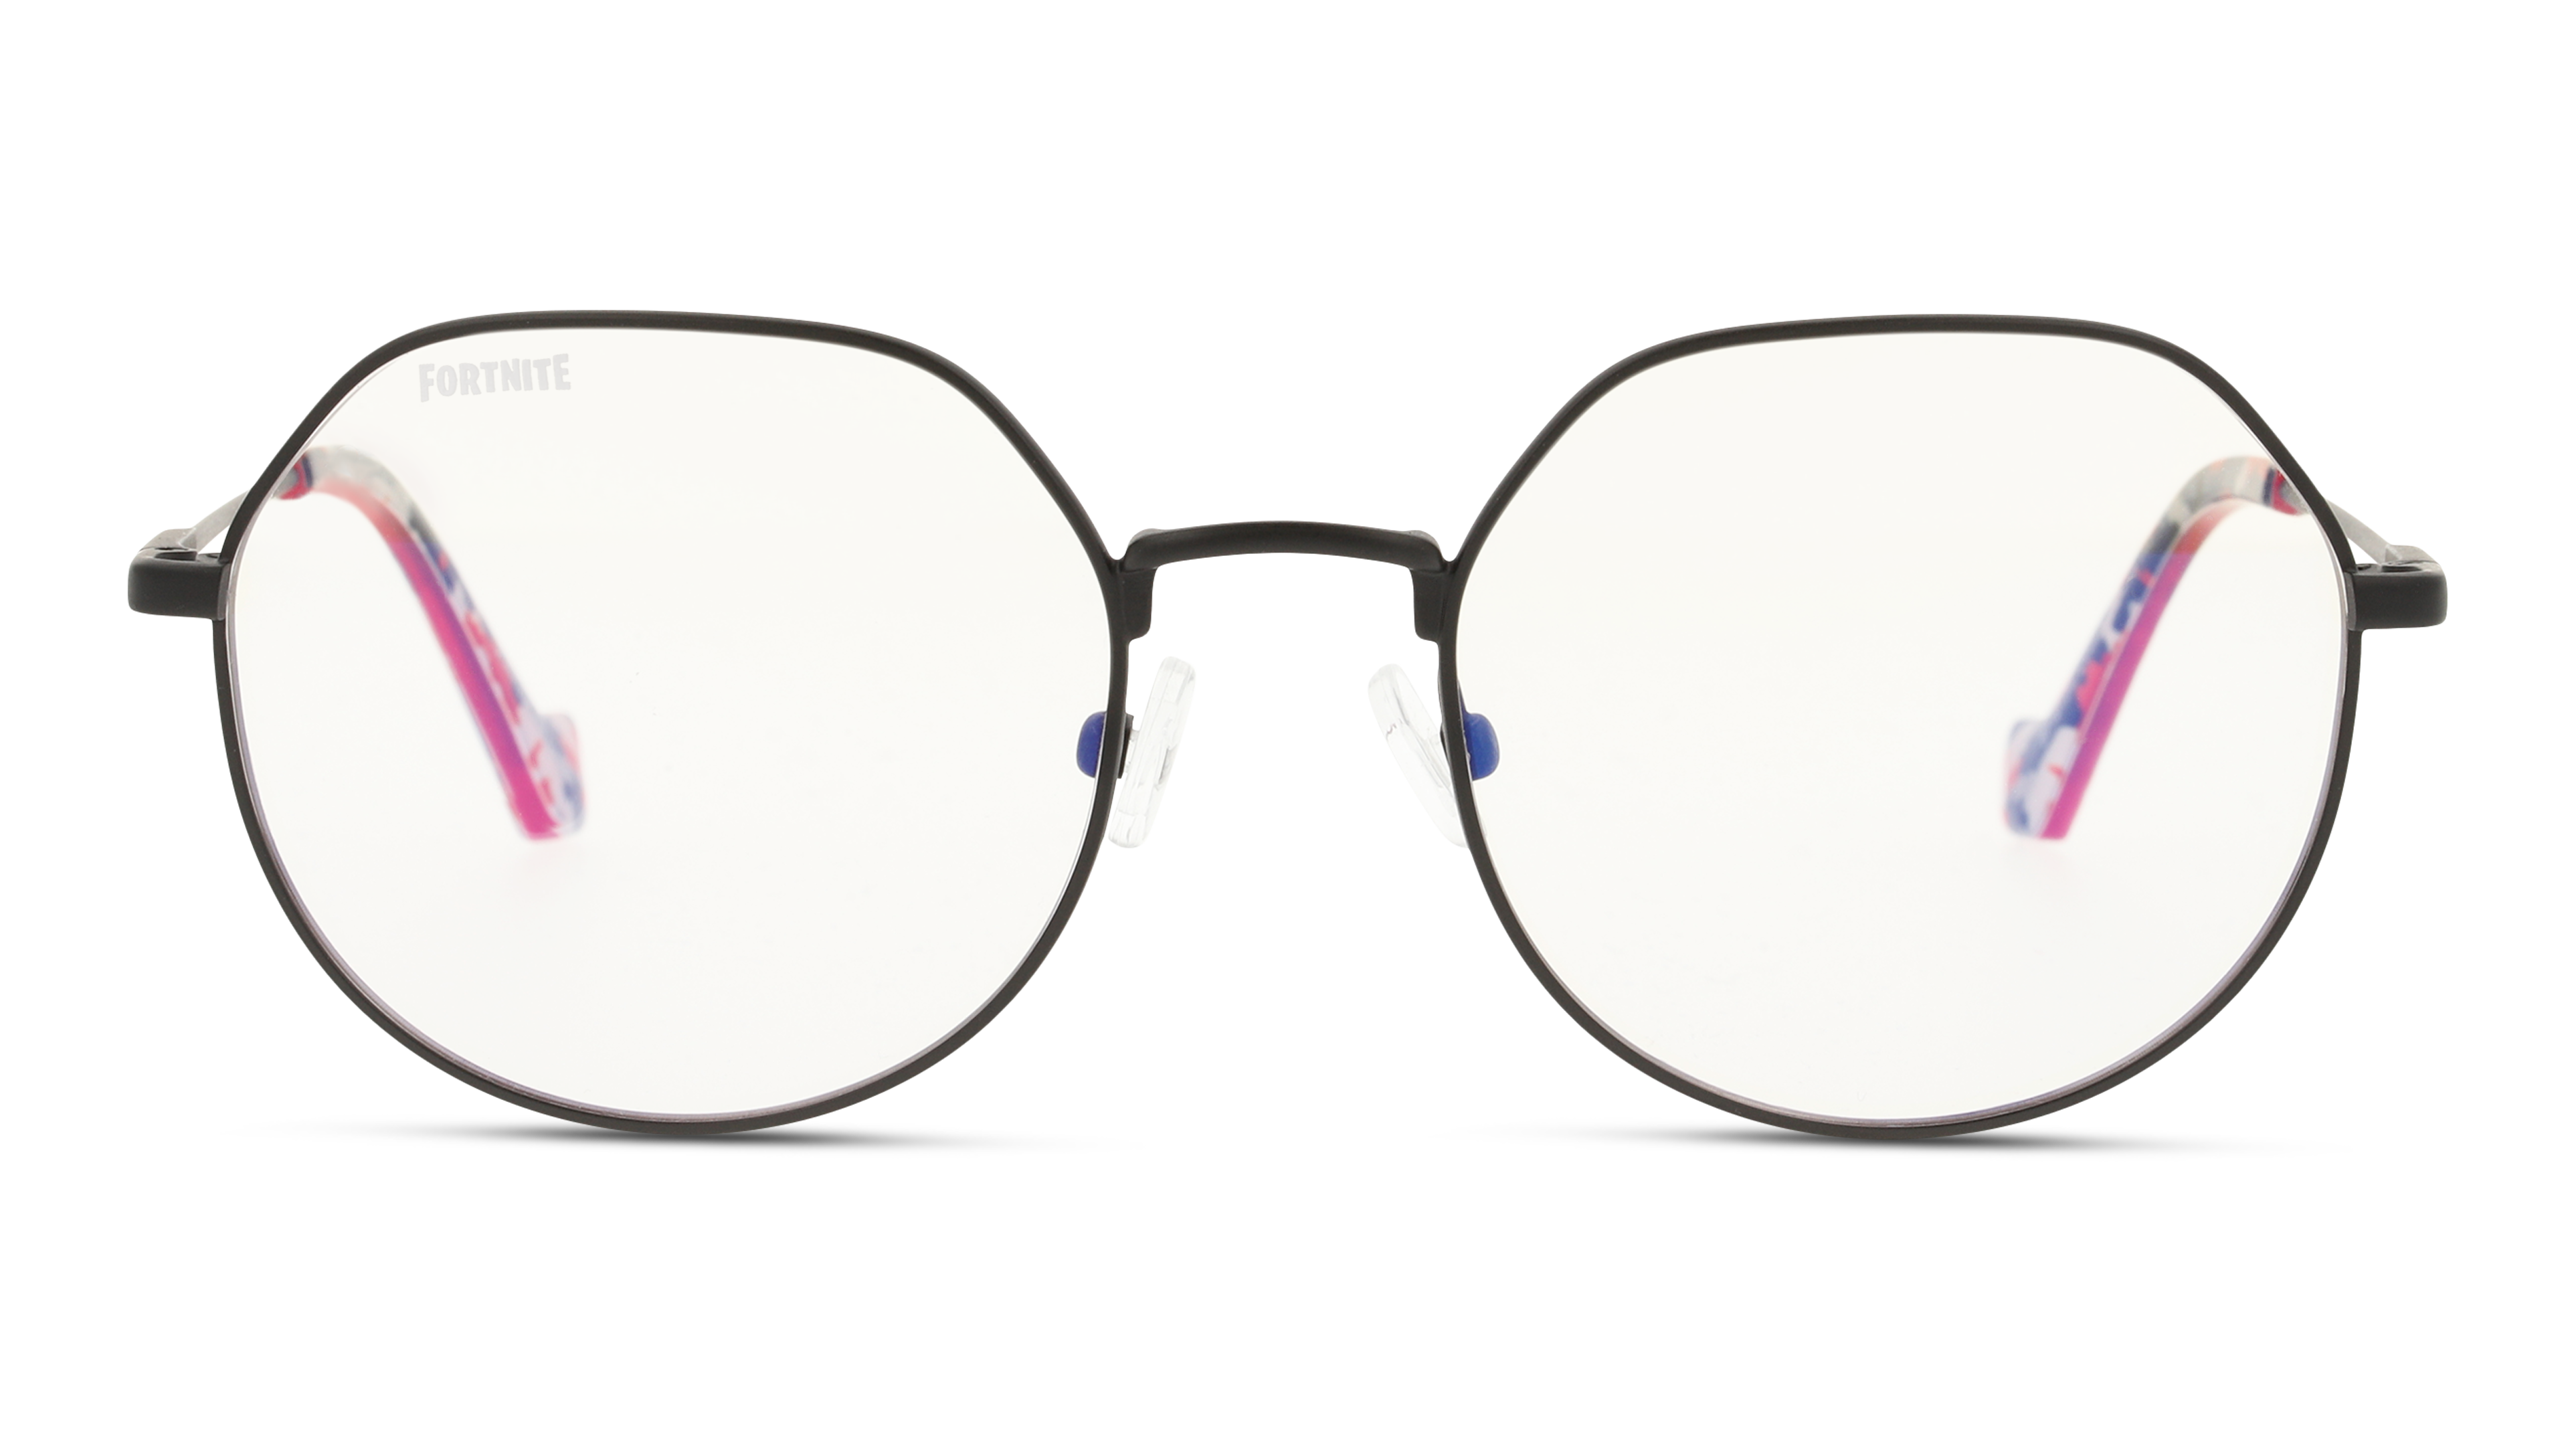 Front Fortnite with Unofficial UNSU0168 (BBT0) Glasses Transparent / Black